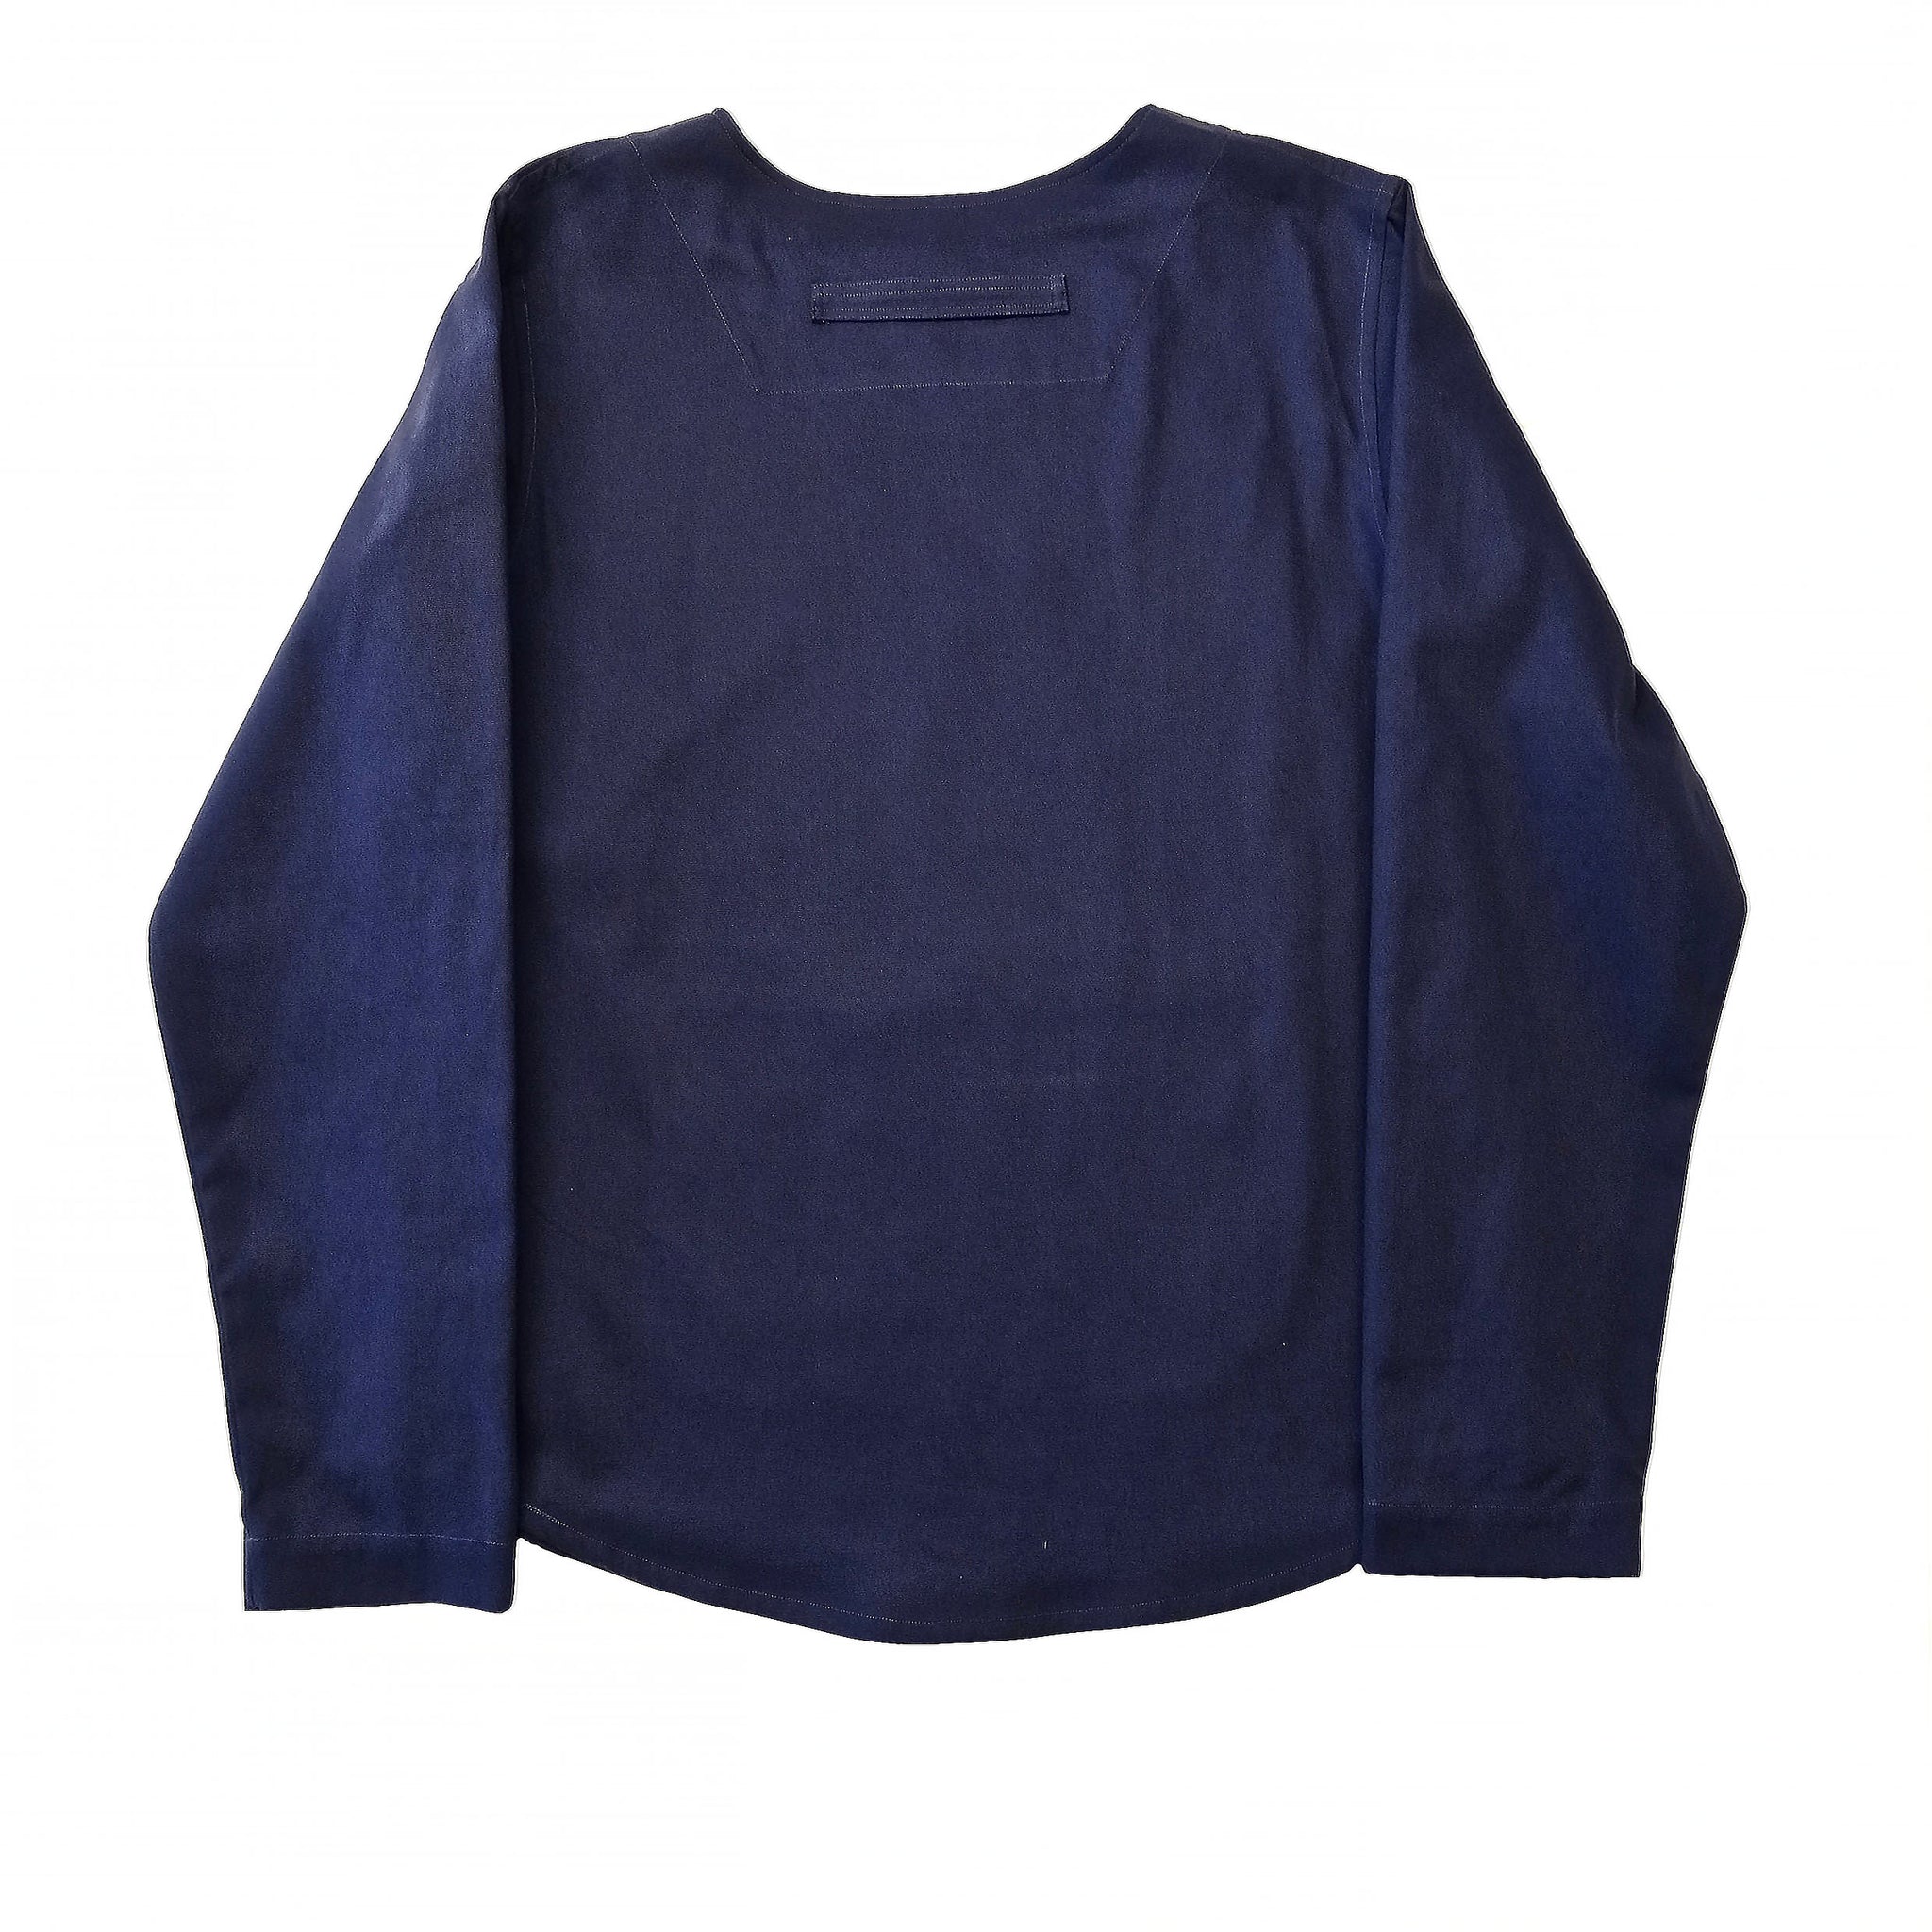 menswear blue cotton artists top